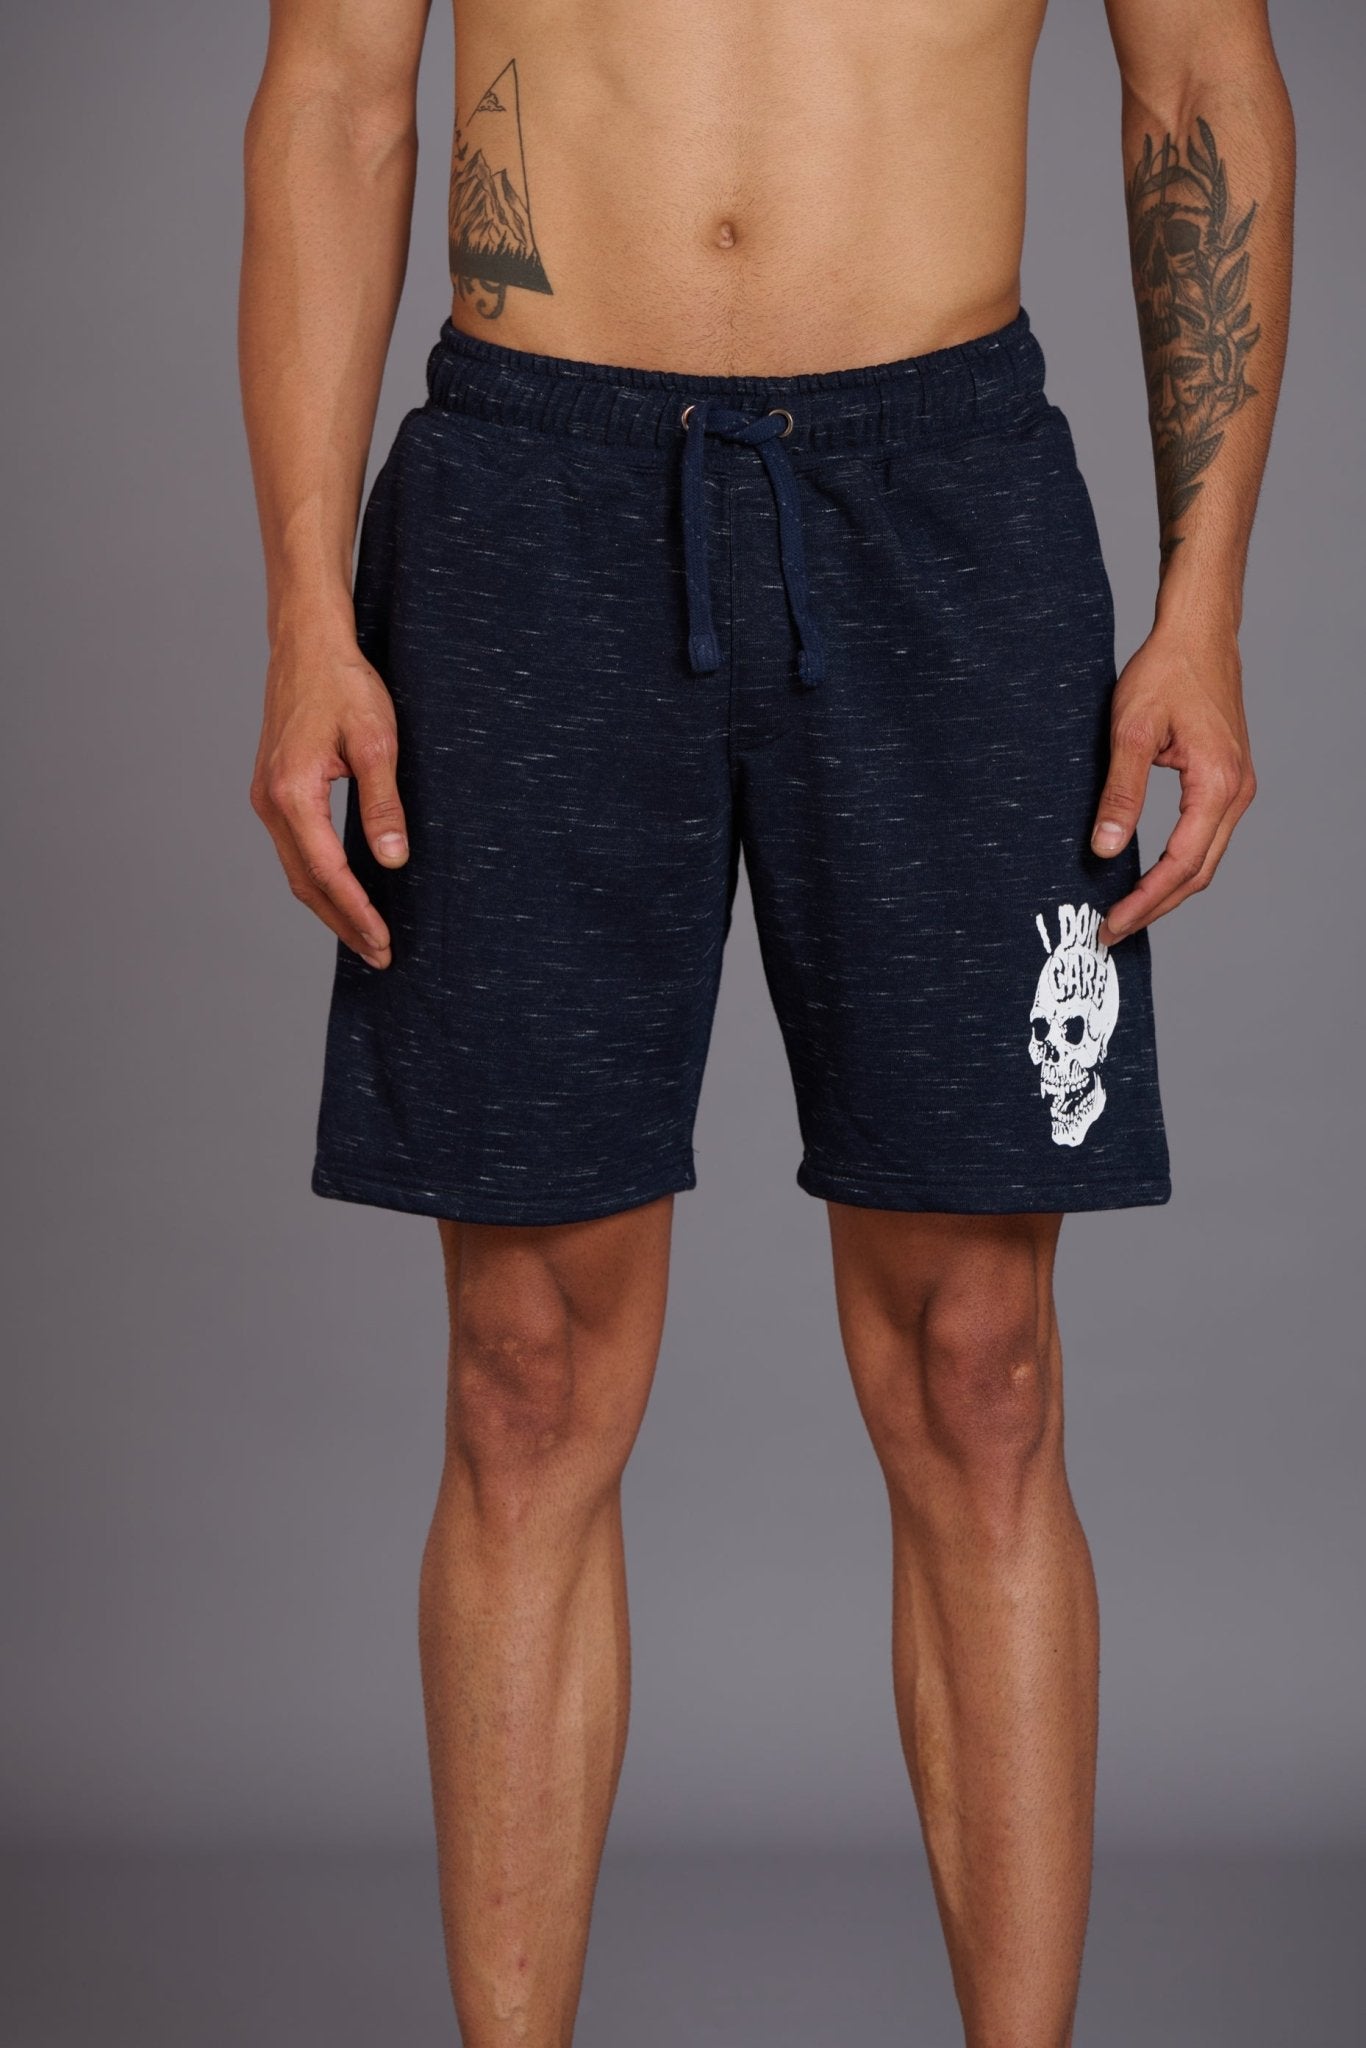 Skull & I Don’t Care Printed Navy Slub Shorts for Men - Go Devil